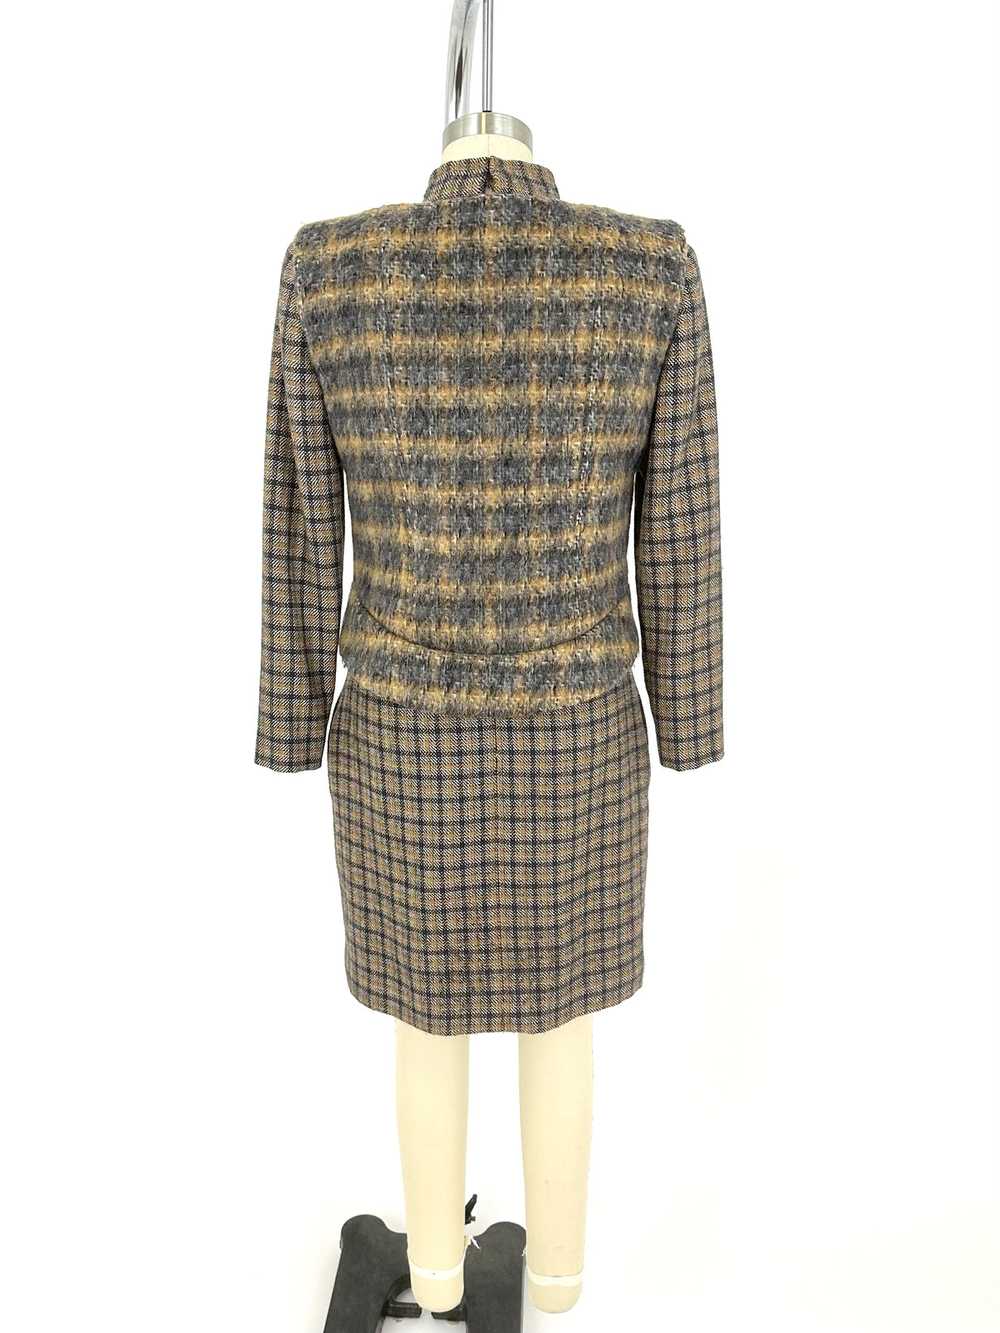 70s Galanos Wool Plaid Dress Set - image 3